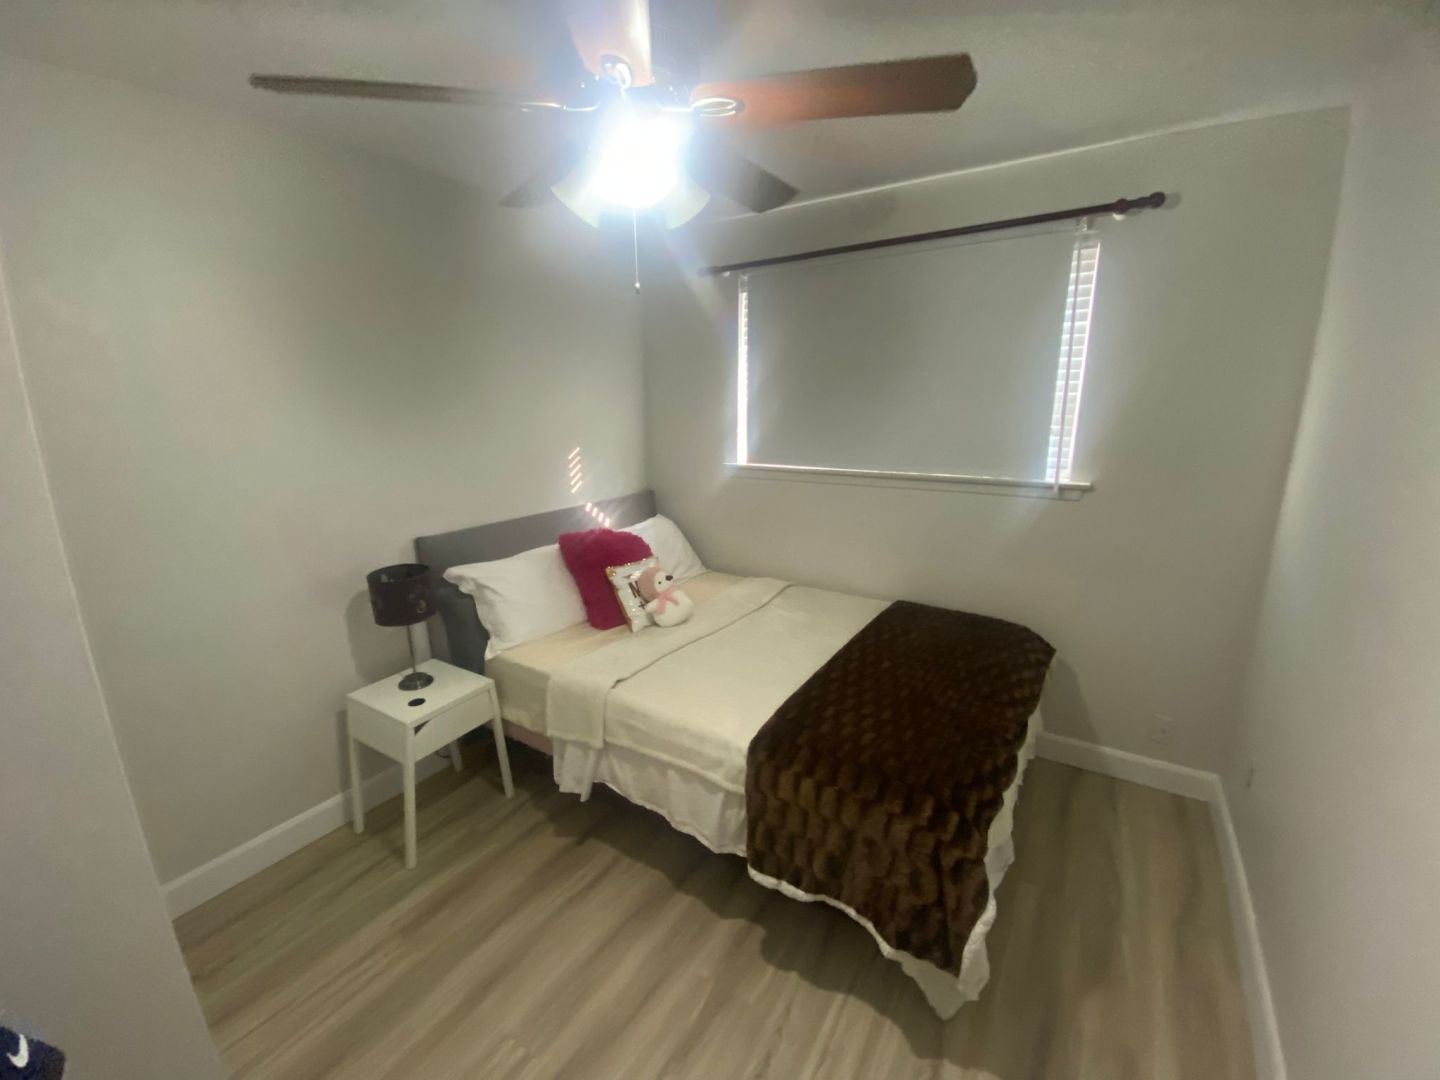 Premium Homestay Room - Lanyard Rd, Toronto room for rent 89